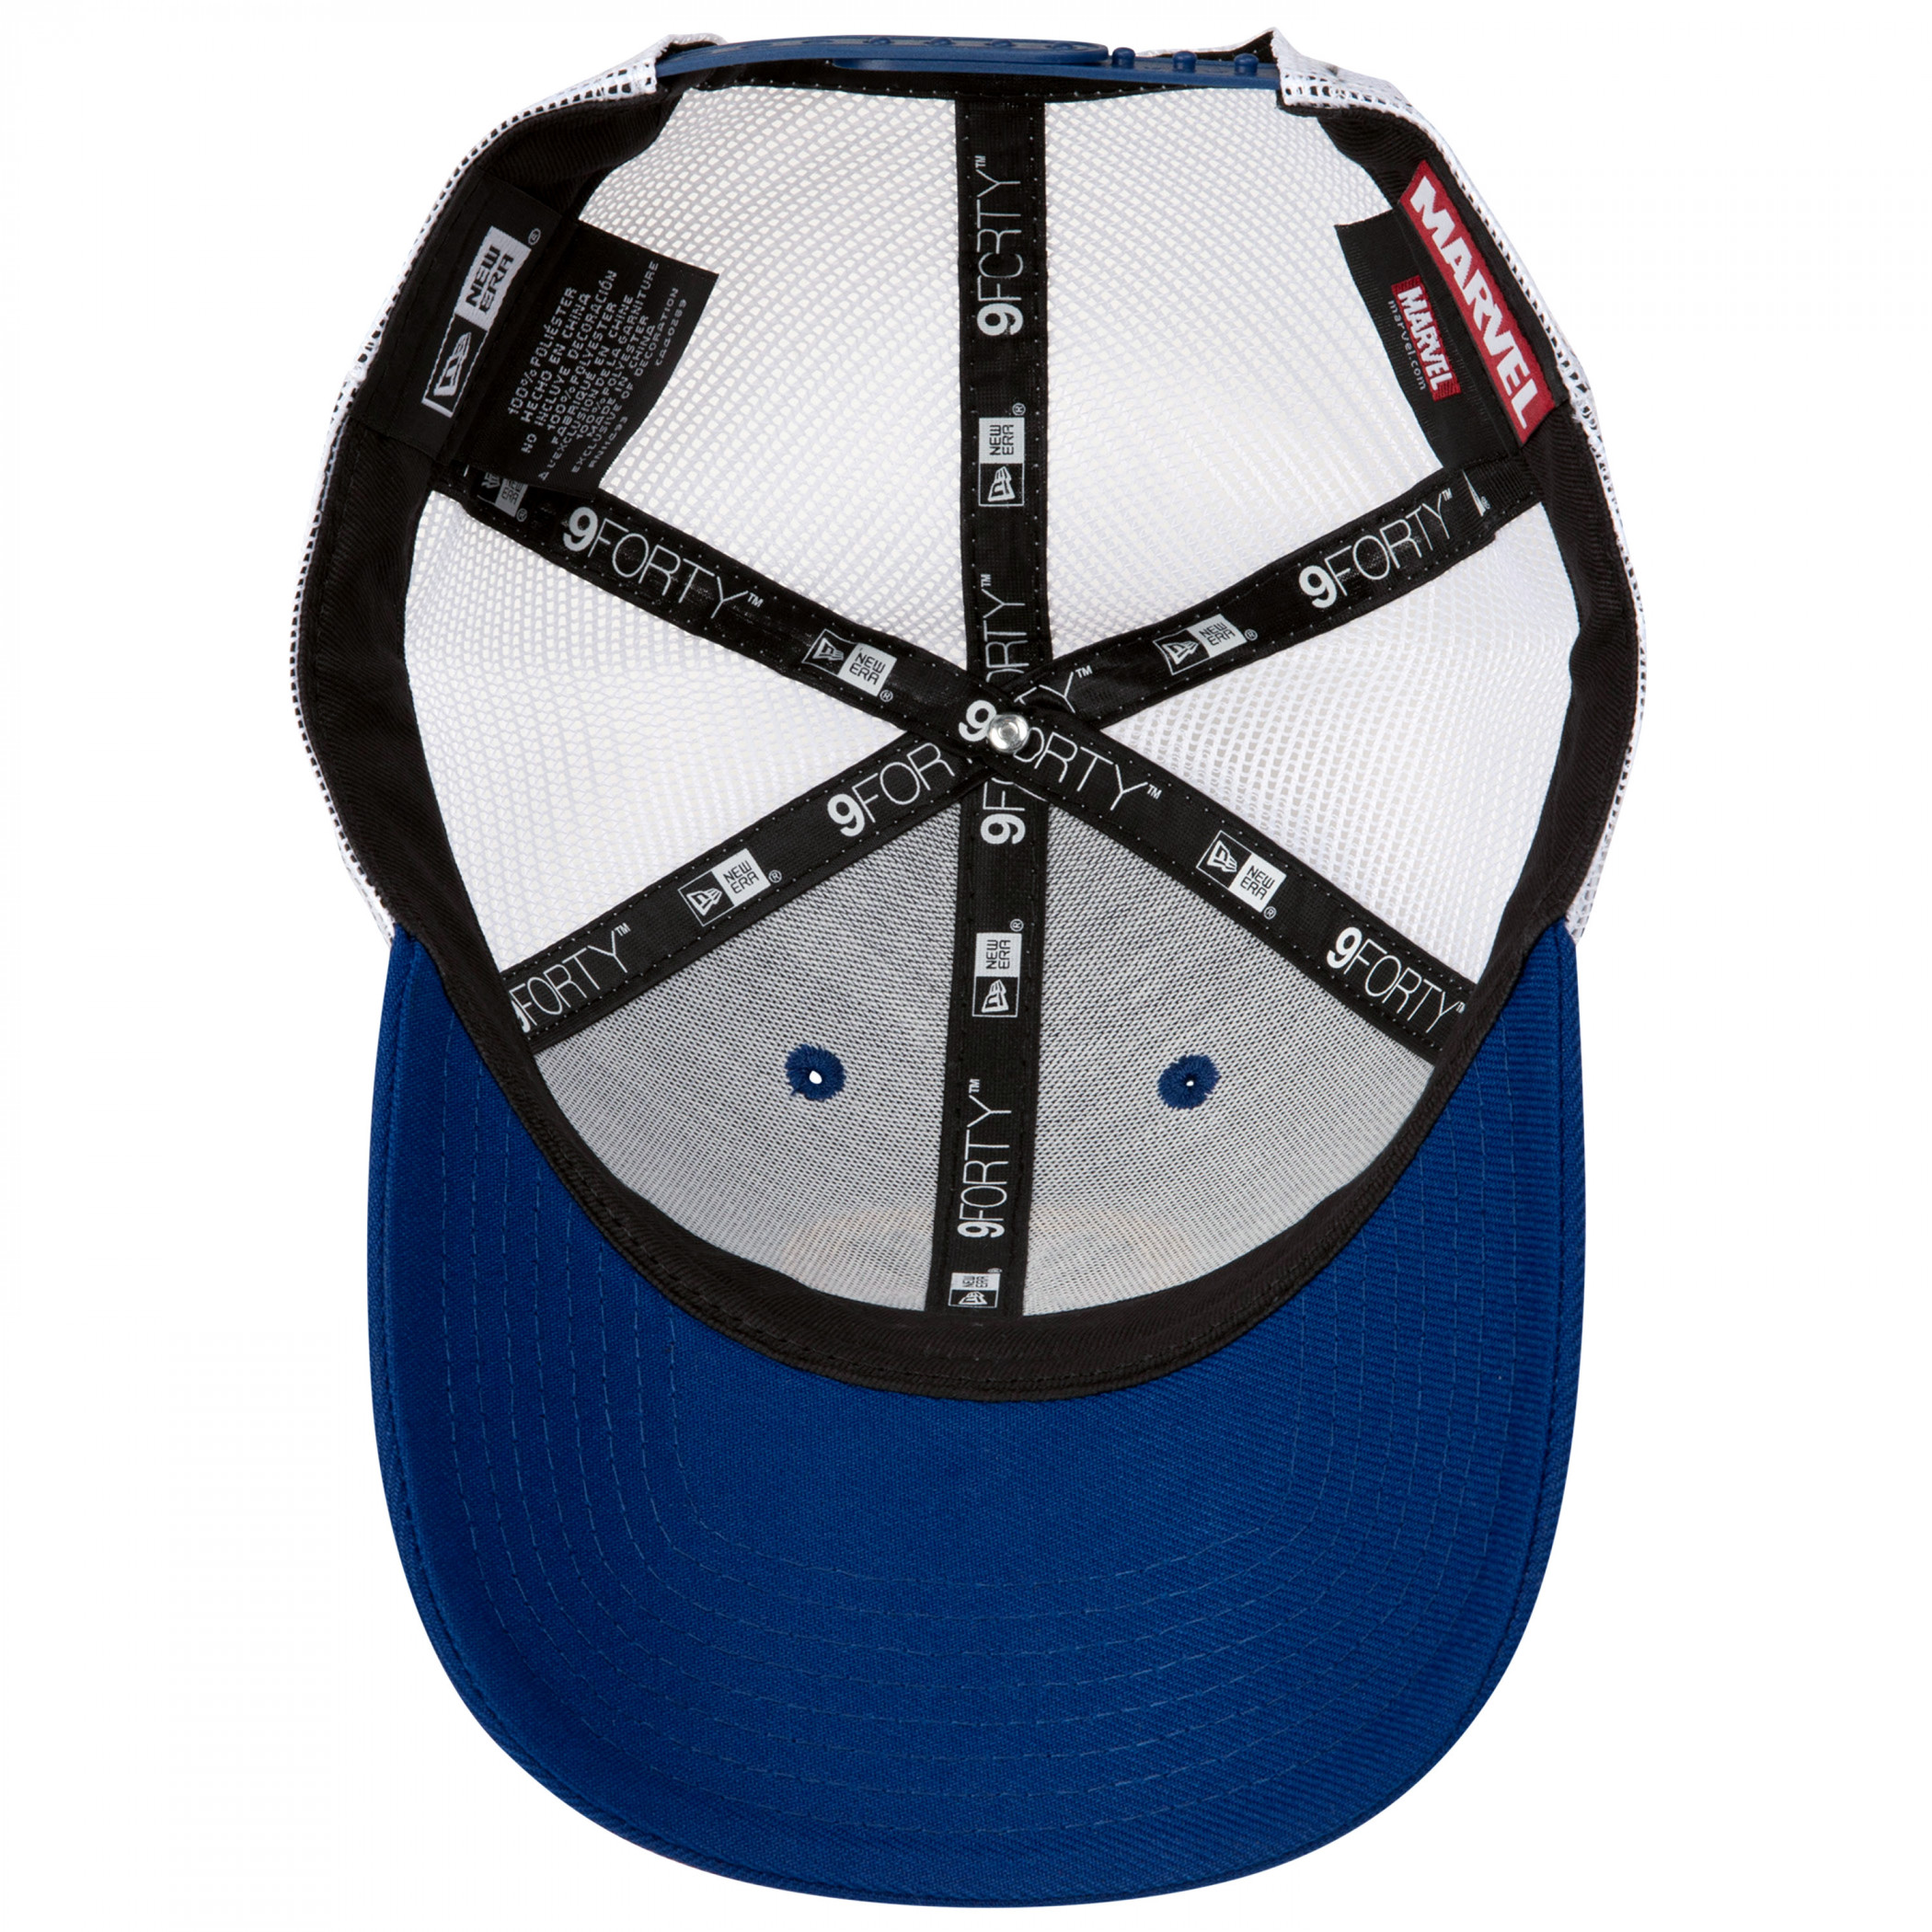 X-Men Logo New Era 9Forty Adjustable Trucker Hat